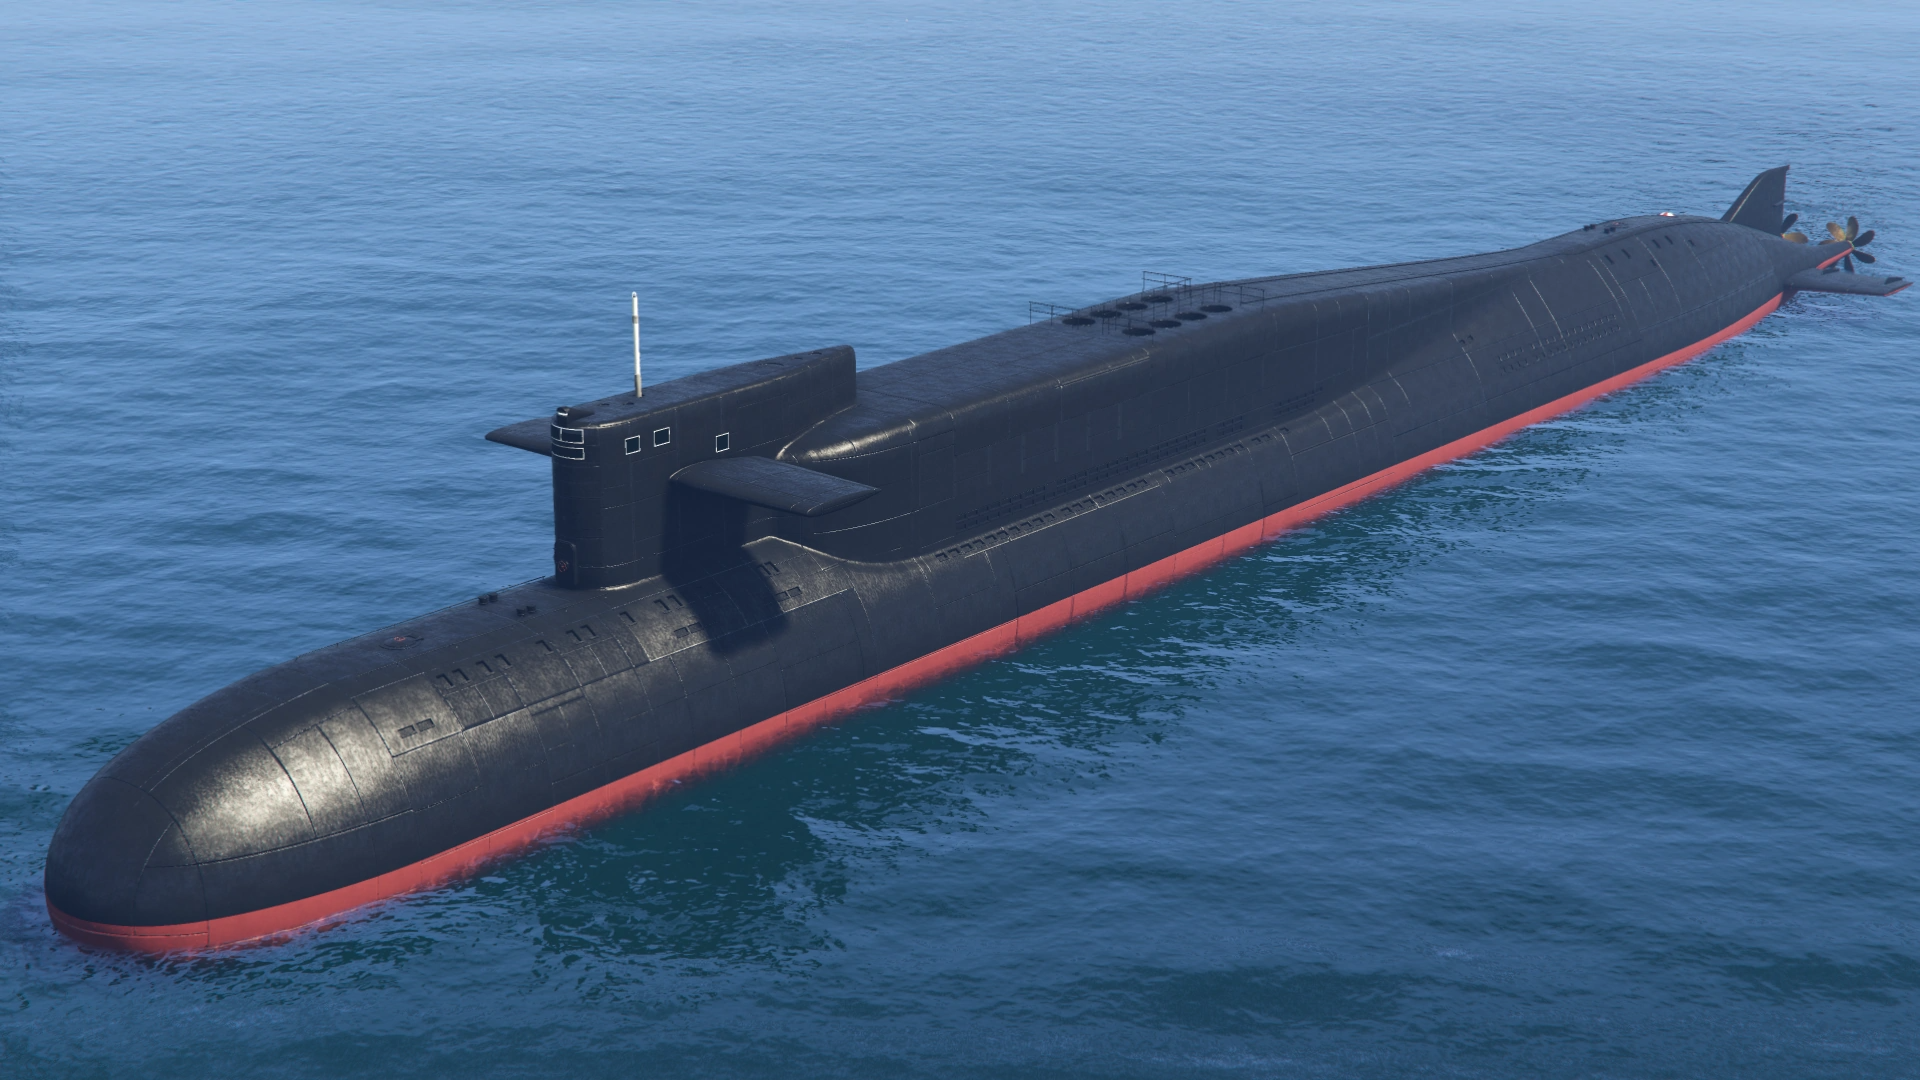 interferentie Avondeten In tegenspraak How To Buy The Kosatka Submarine In GTA Online - GameSpot